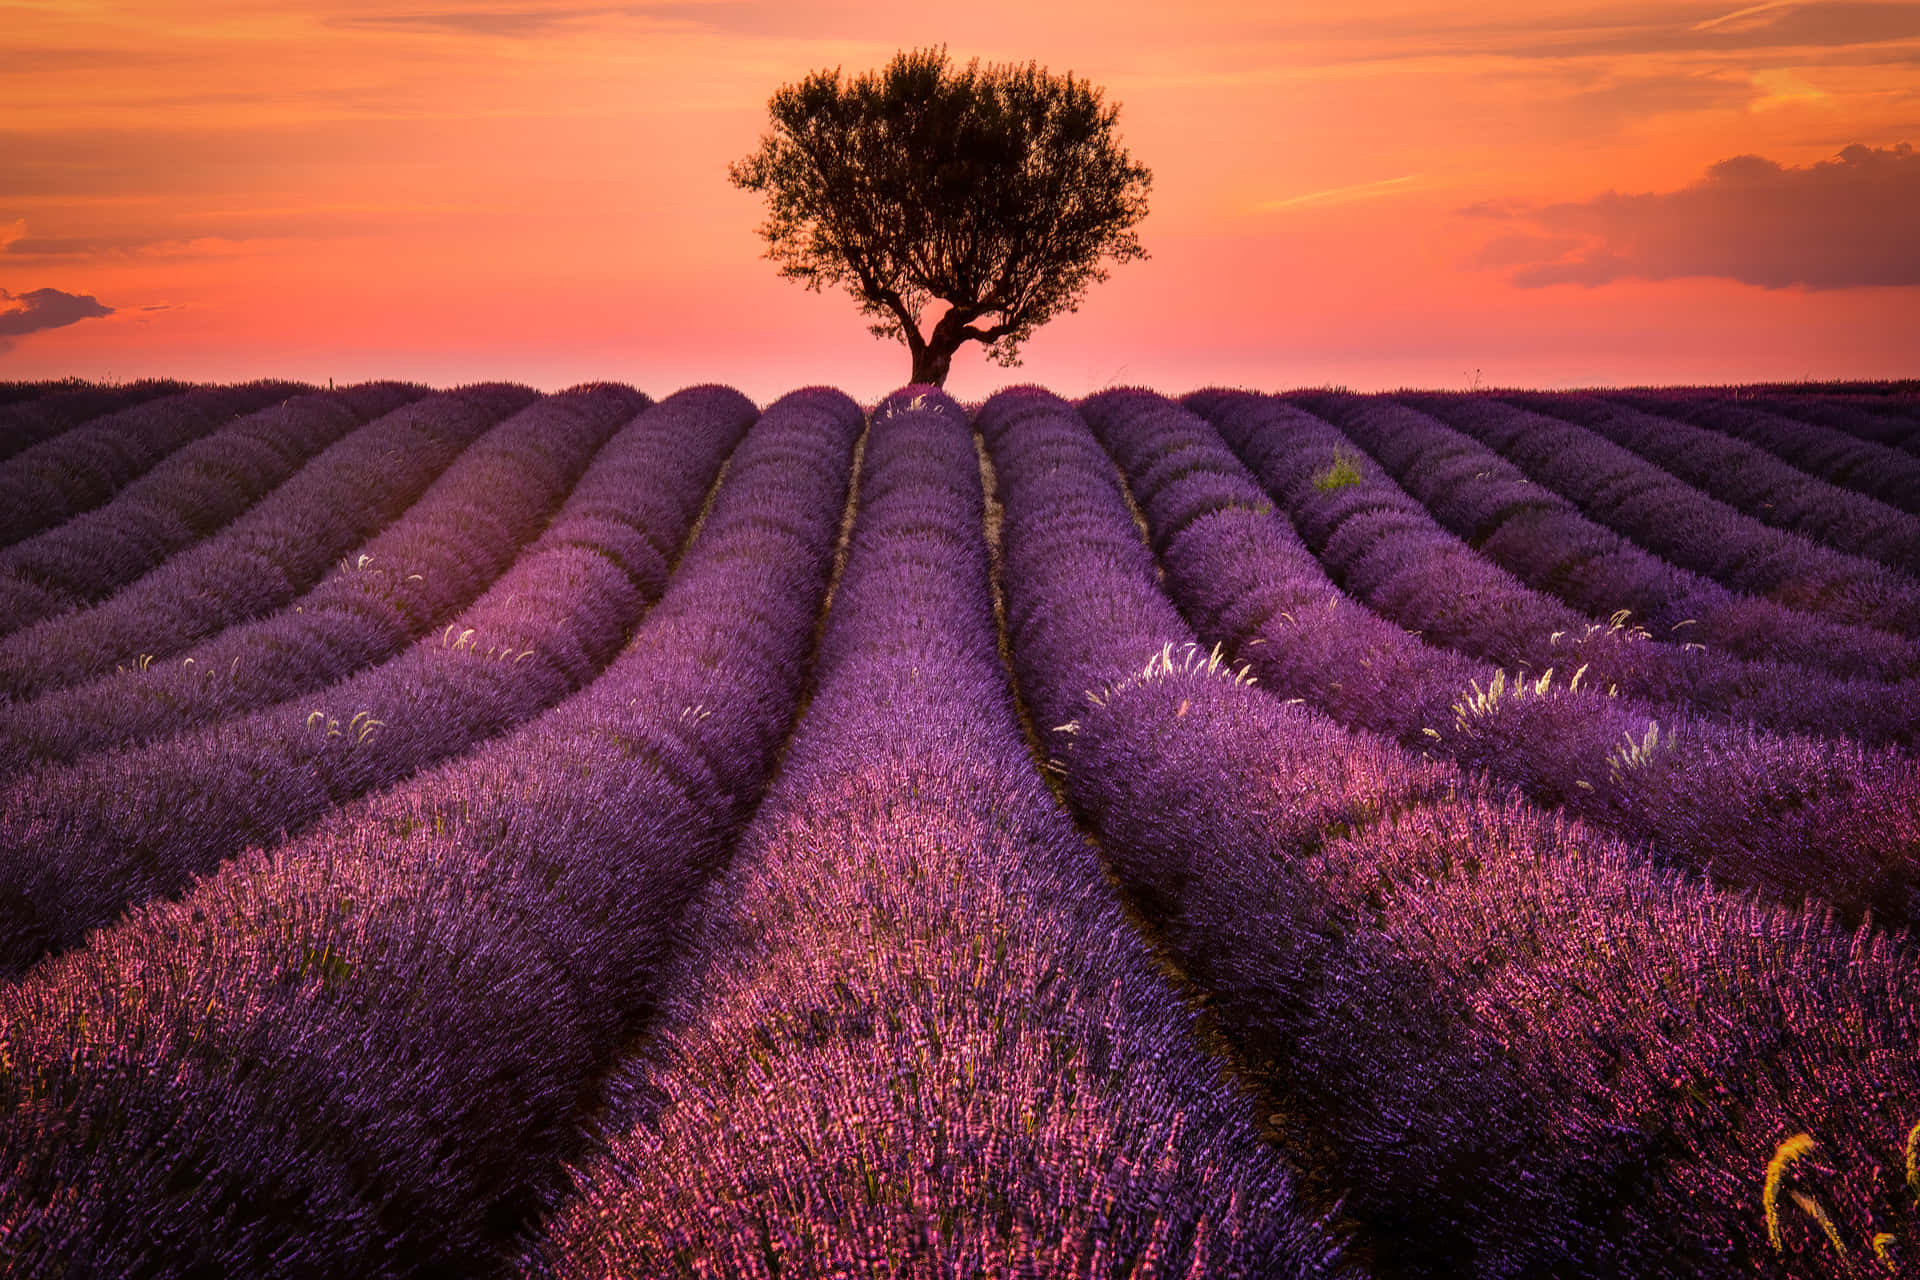 https://wallpapers.com/images/hd/lavender-field-under-peach-dusk-skies-mfaccxnbxrfhxxpx.jpg